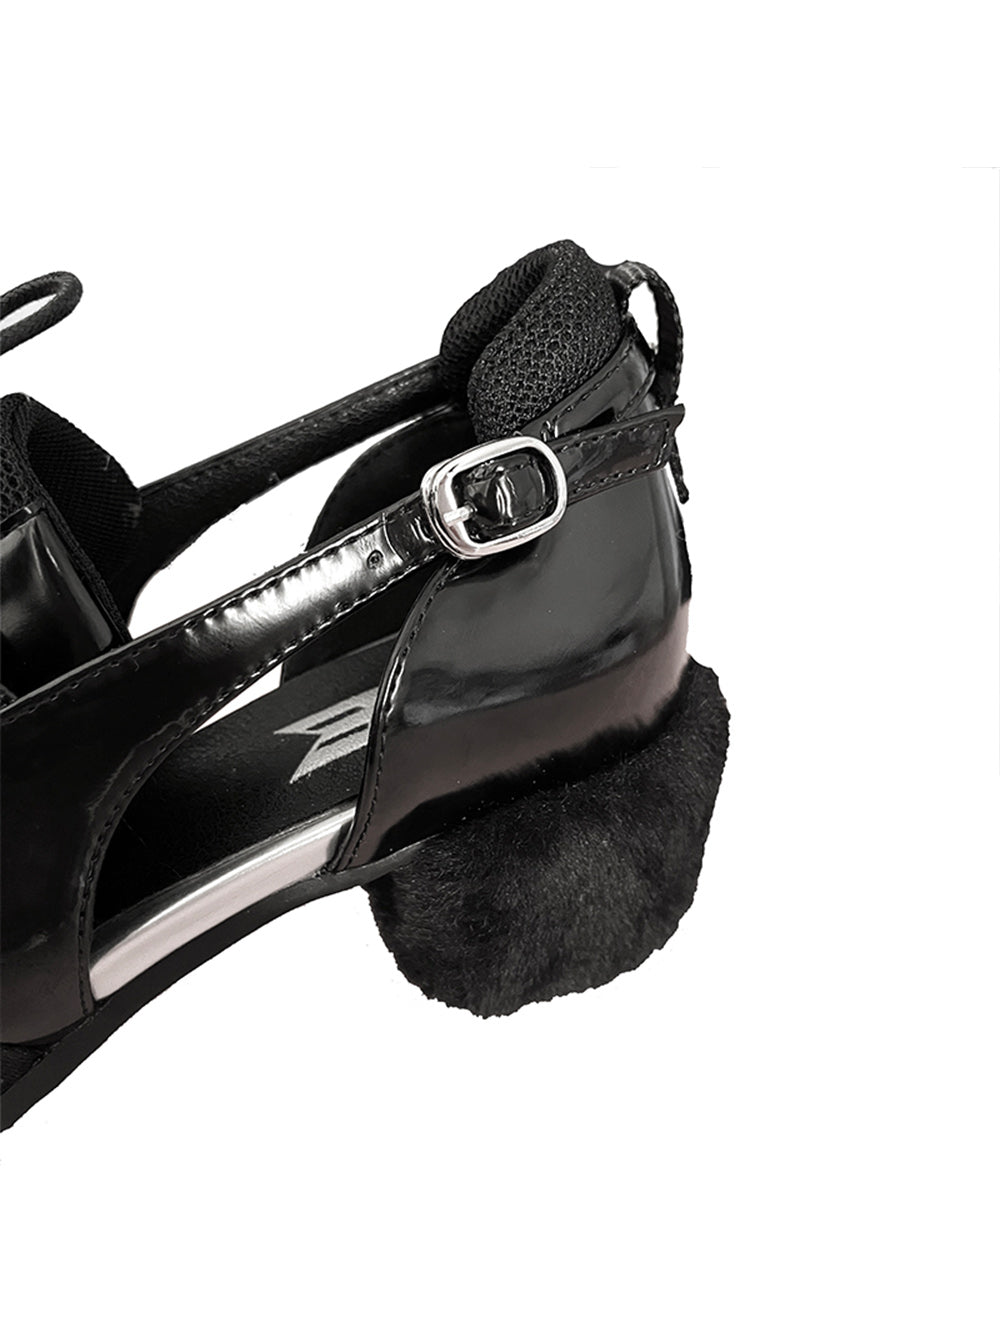 MUKTANK×AZ43 Comfortable Low Heel Black All-match Classic Shoes